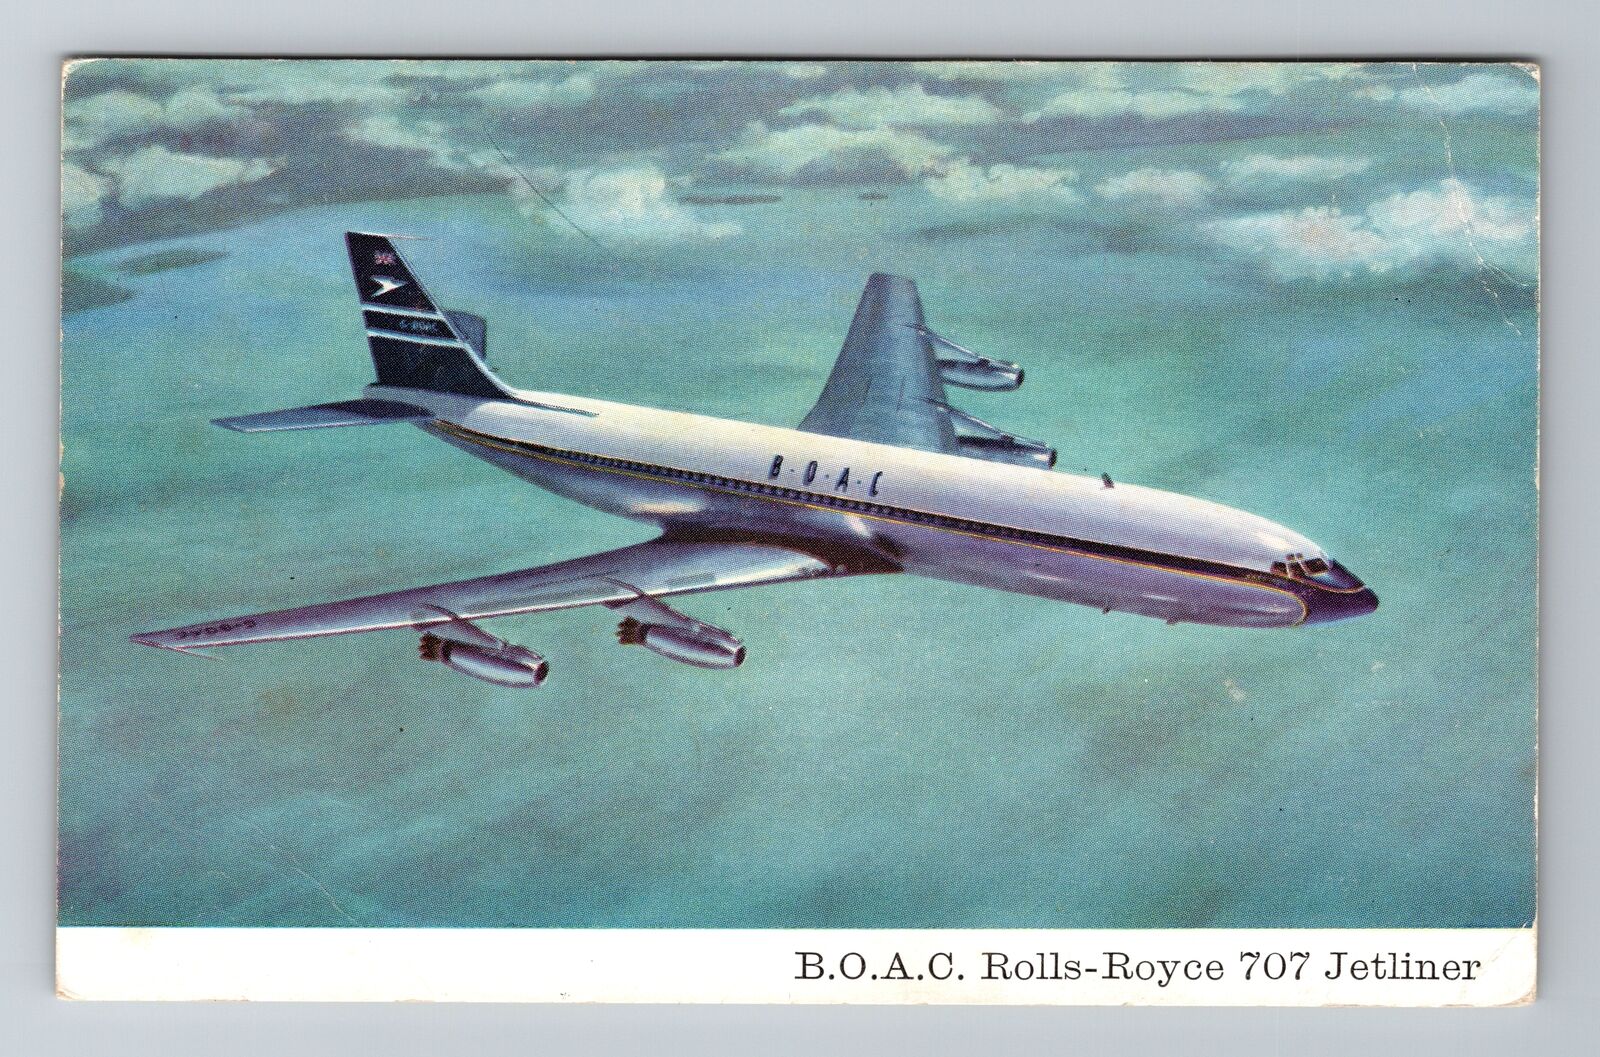 B.O.A.C. Boeing Rolls Royce Engines 707 Jetliner Vintage Souvenir Postcard,